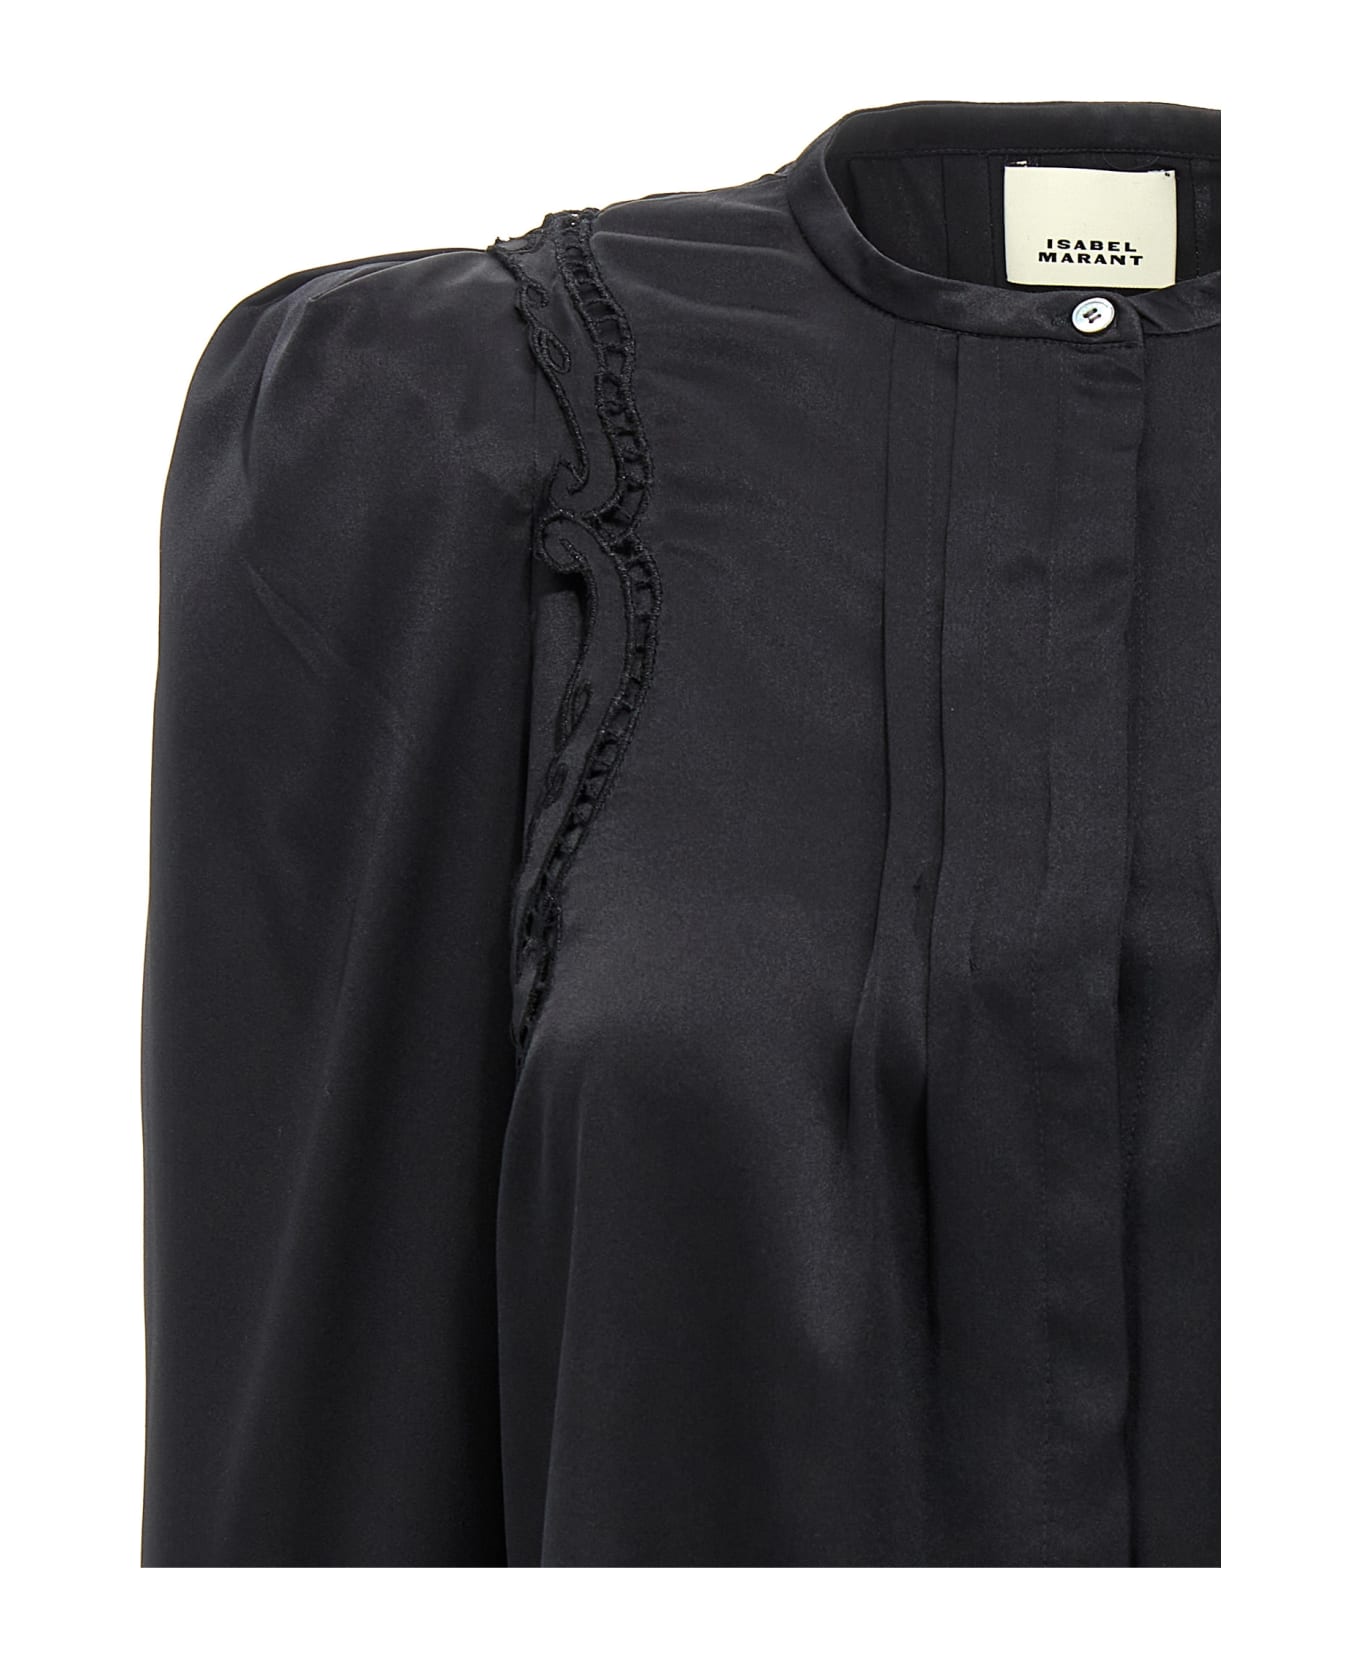 Isabel Marant Joanea Shirt - Black